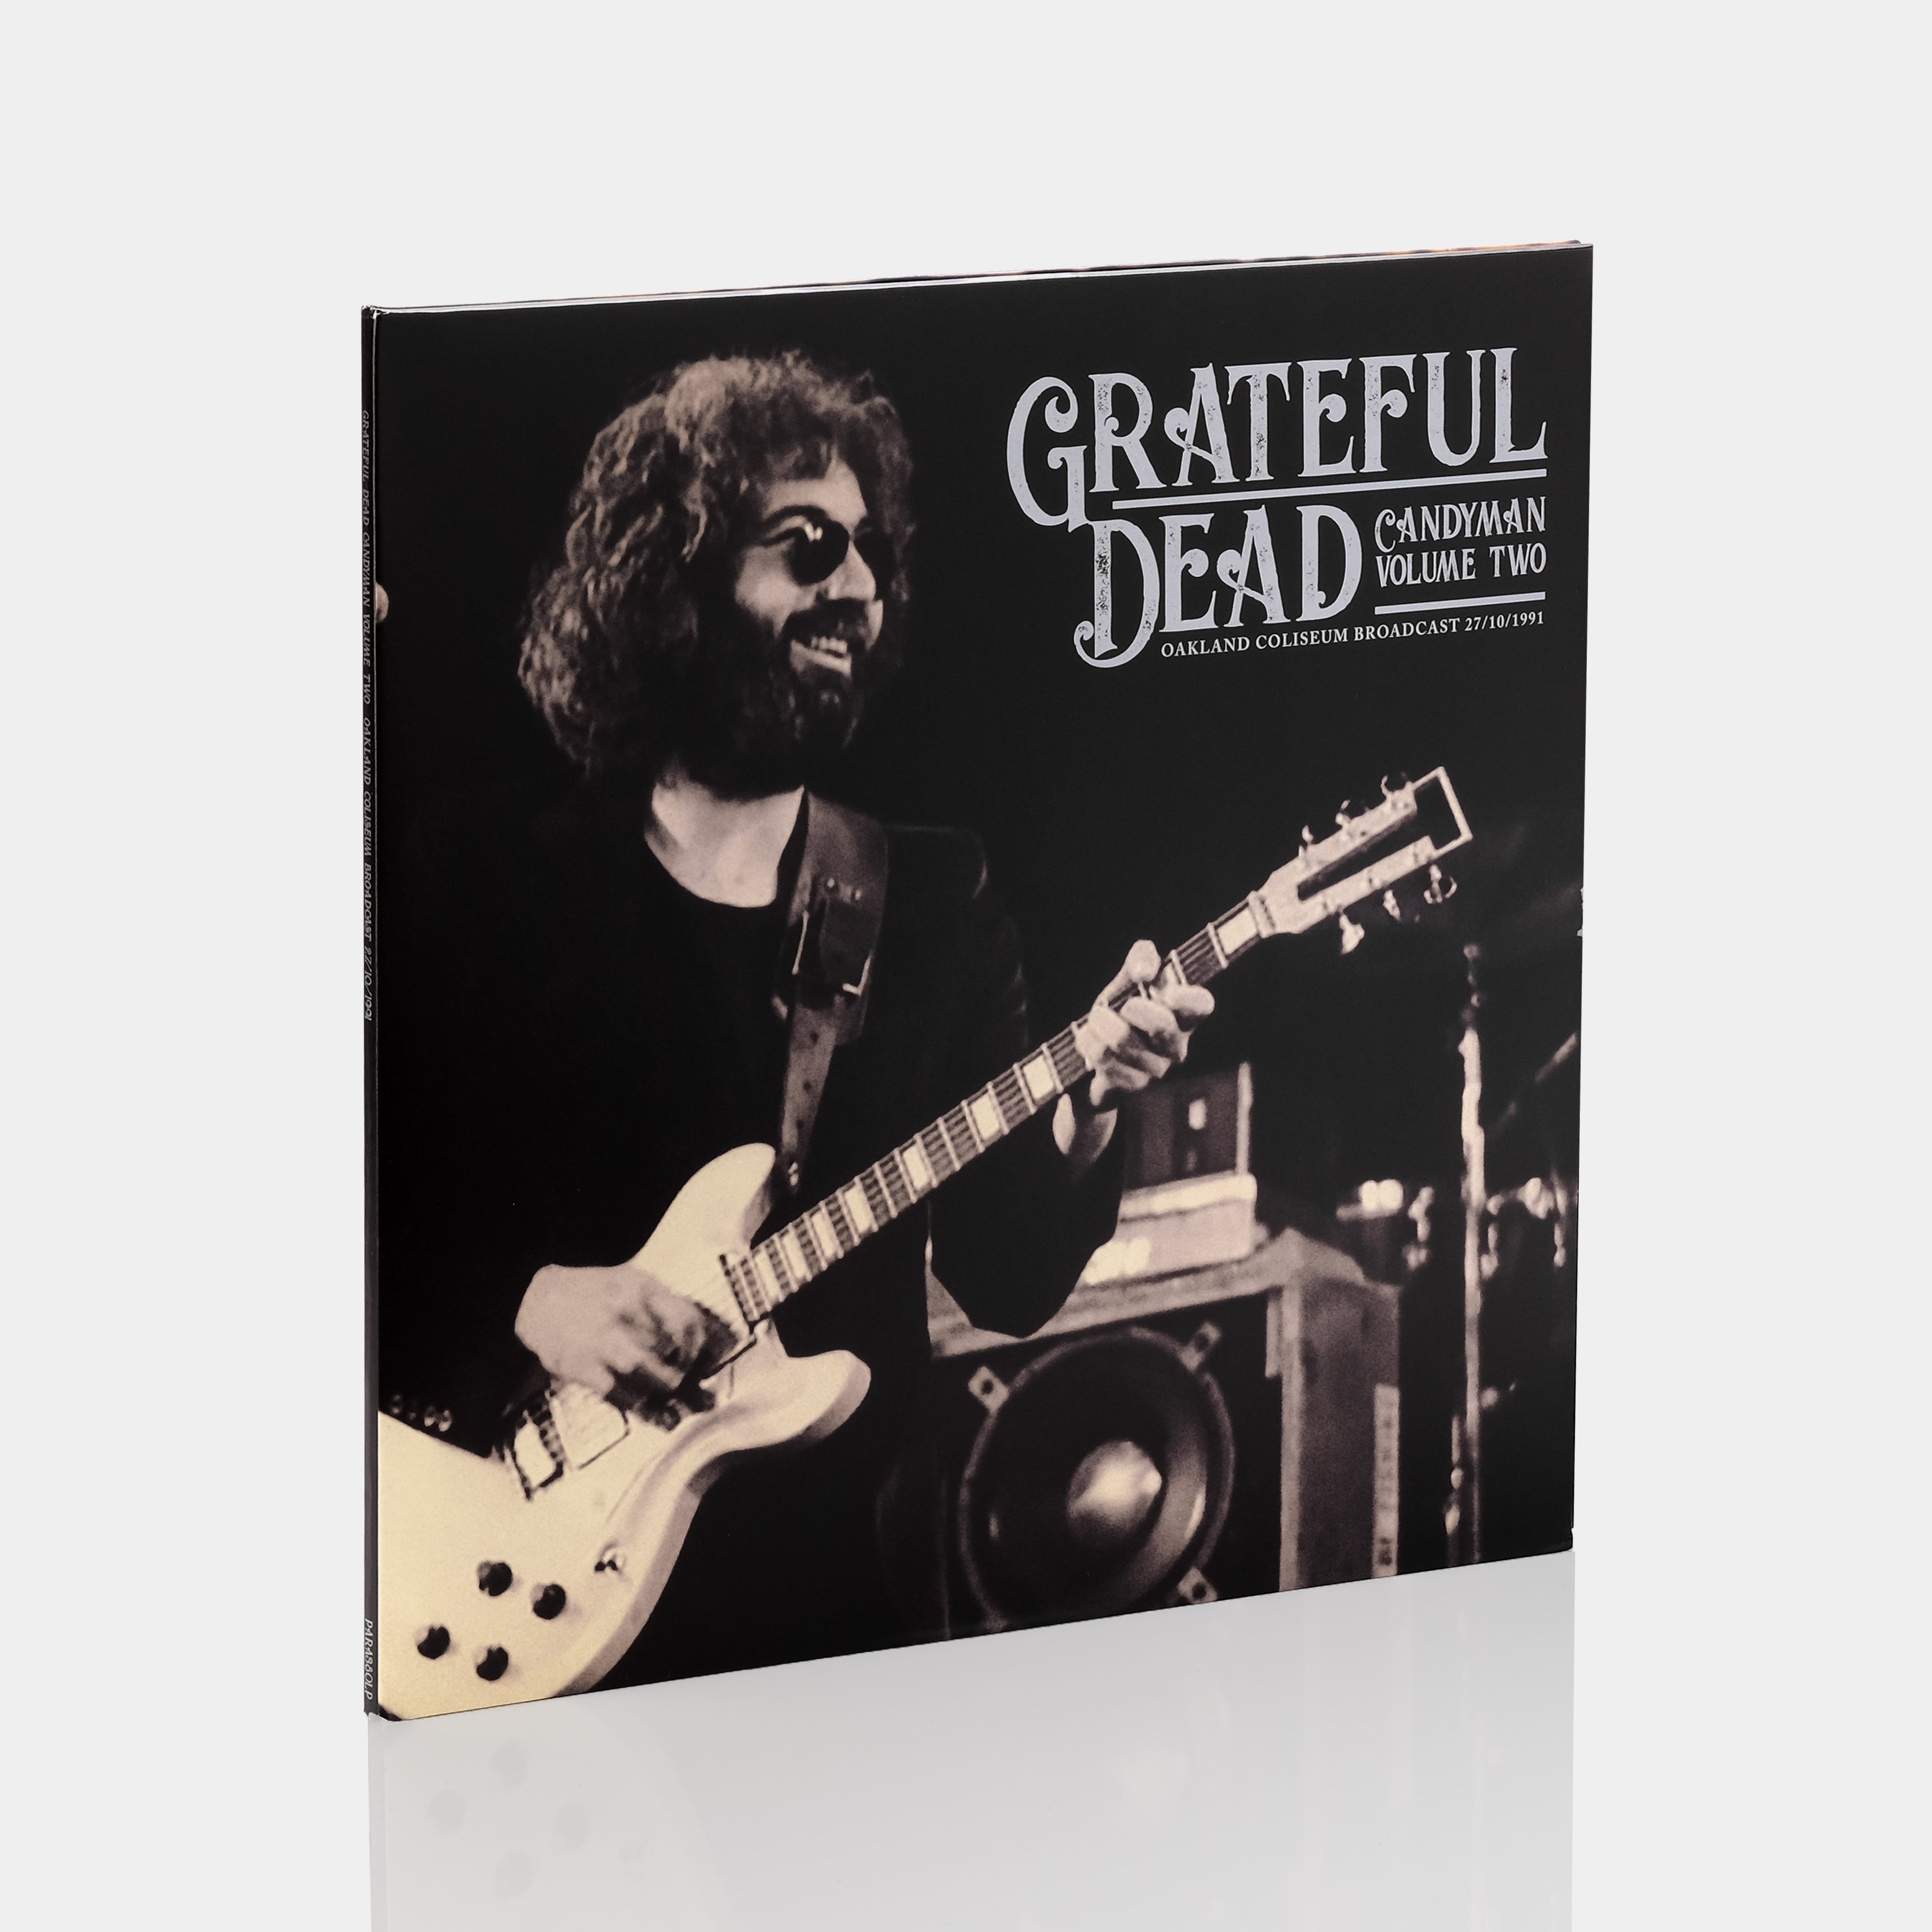 Grateful Dead - Candyman: Oakland Coliseum Broadcast 27/10/1991 (Volume Two) 2xLP Vinyl Record